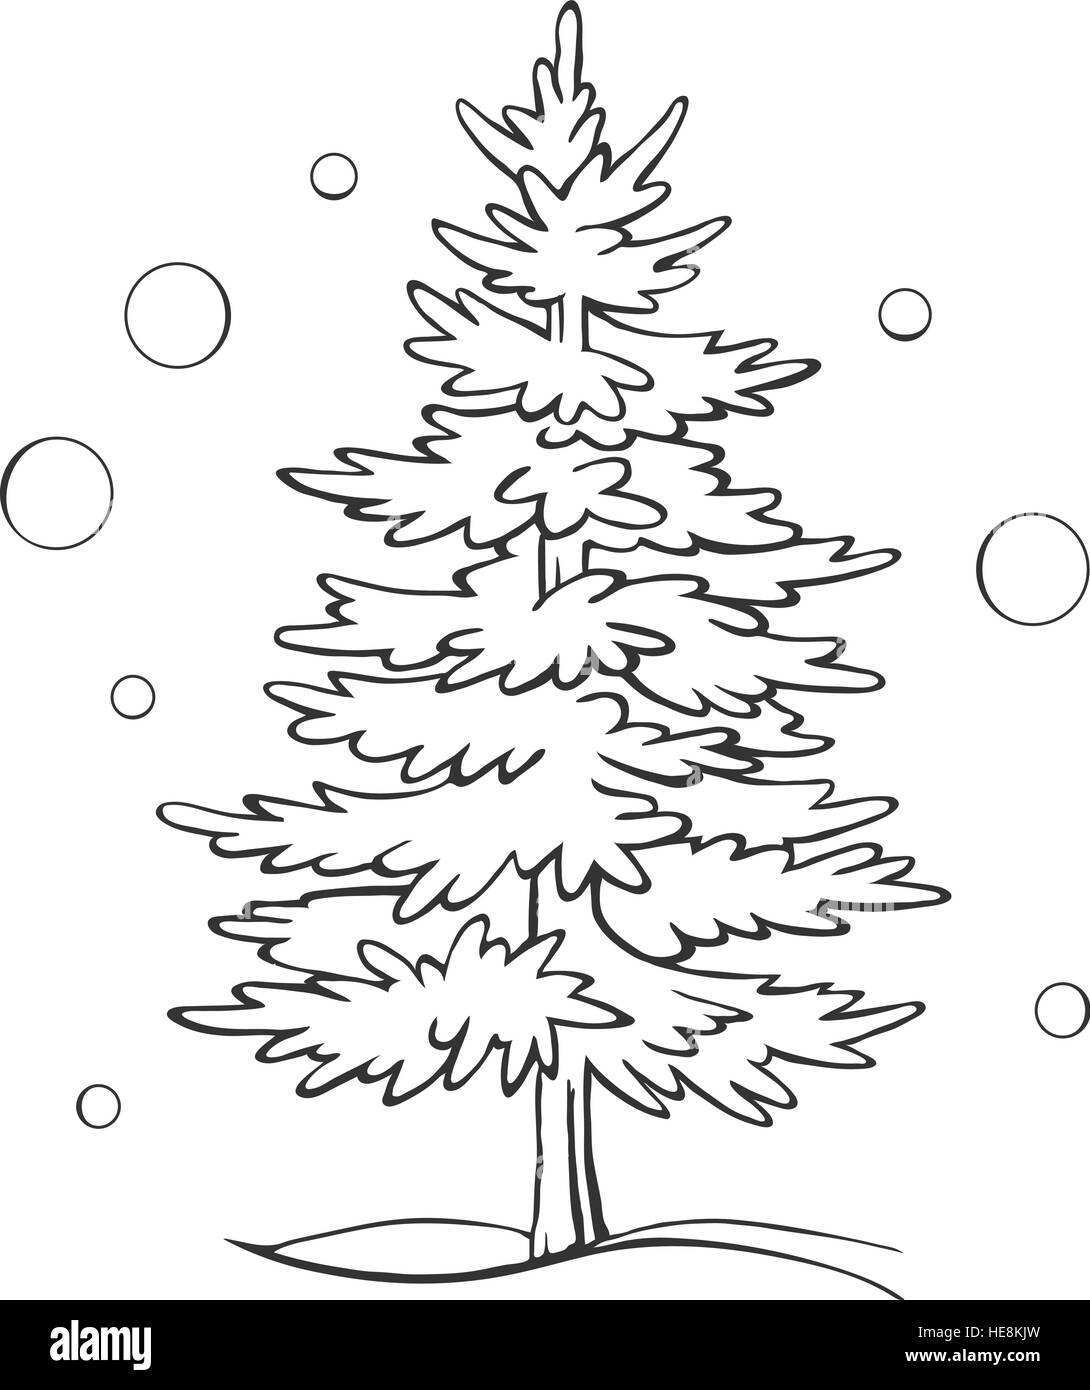 Контурное рисование елки